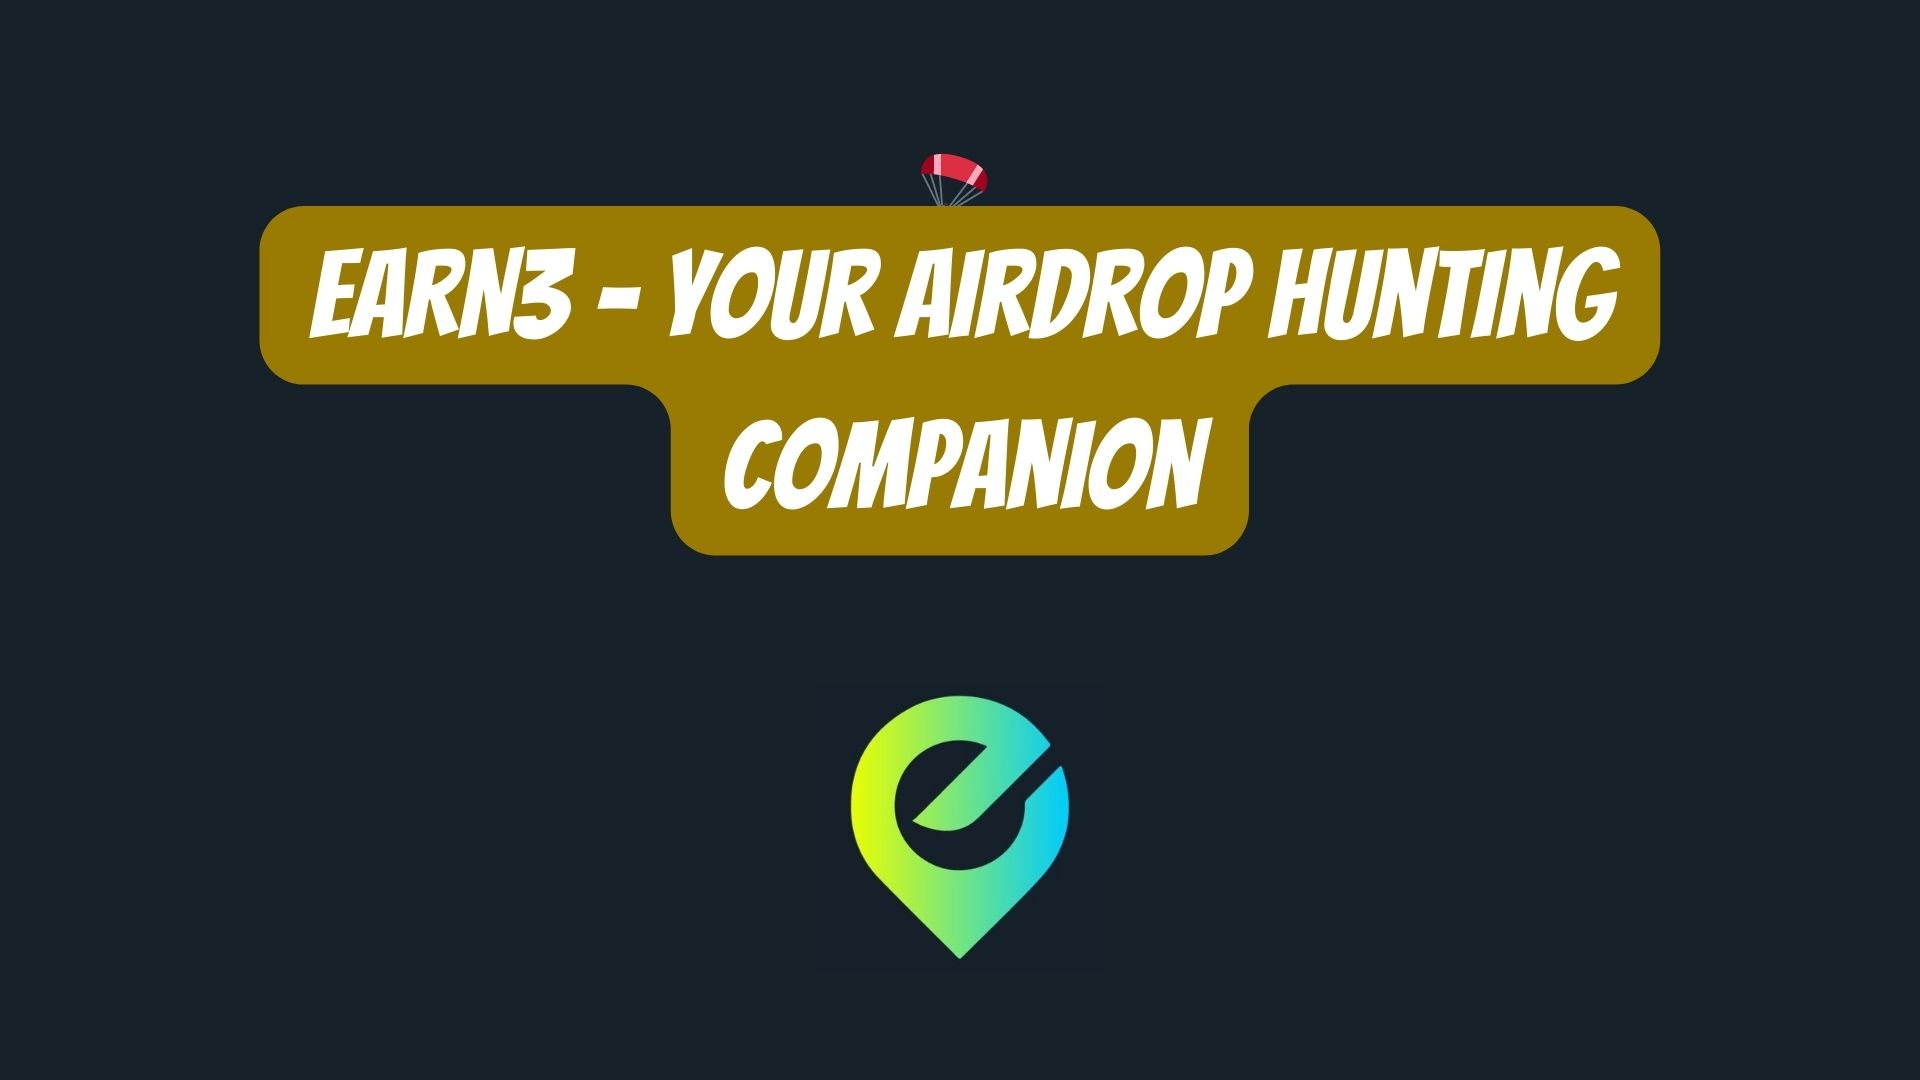 EARN3 - Your Airdrop Hunting Companion.jpeg